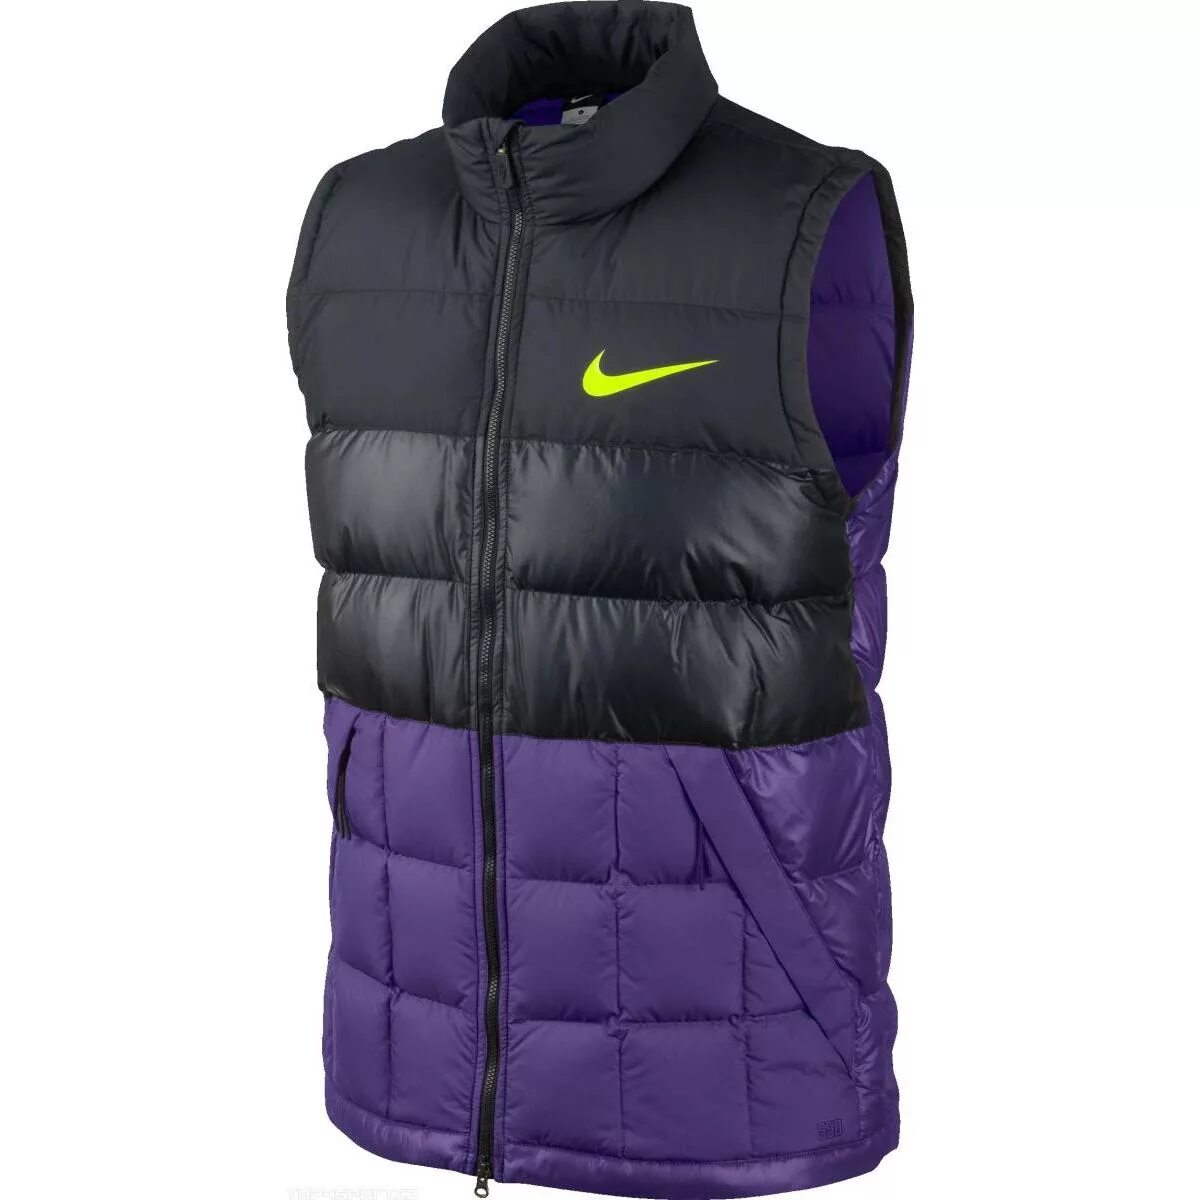 Nike 550 Vest жилетка мужская. Nike Swoosh жилетка мужская. Жилет Nike Basic 550 down Vest. Жилетка мужская утепленная Nike. Найк жилет